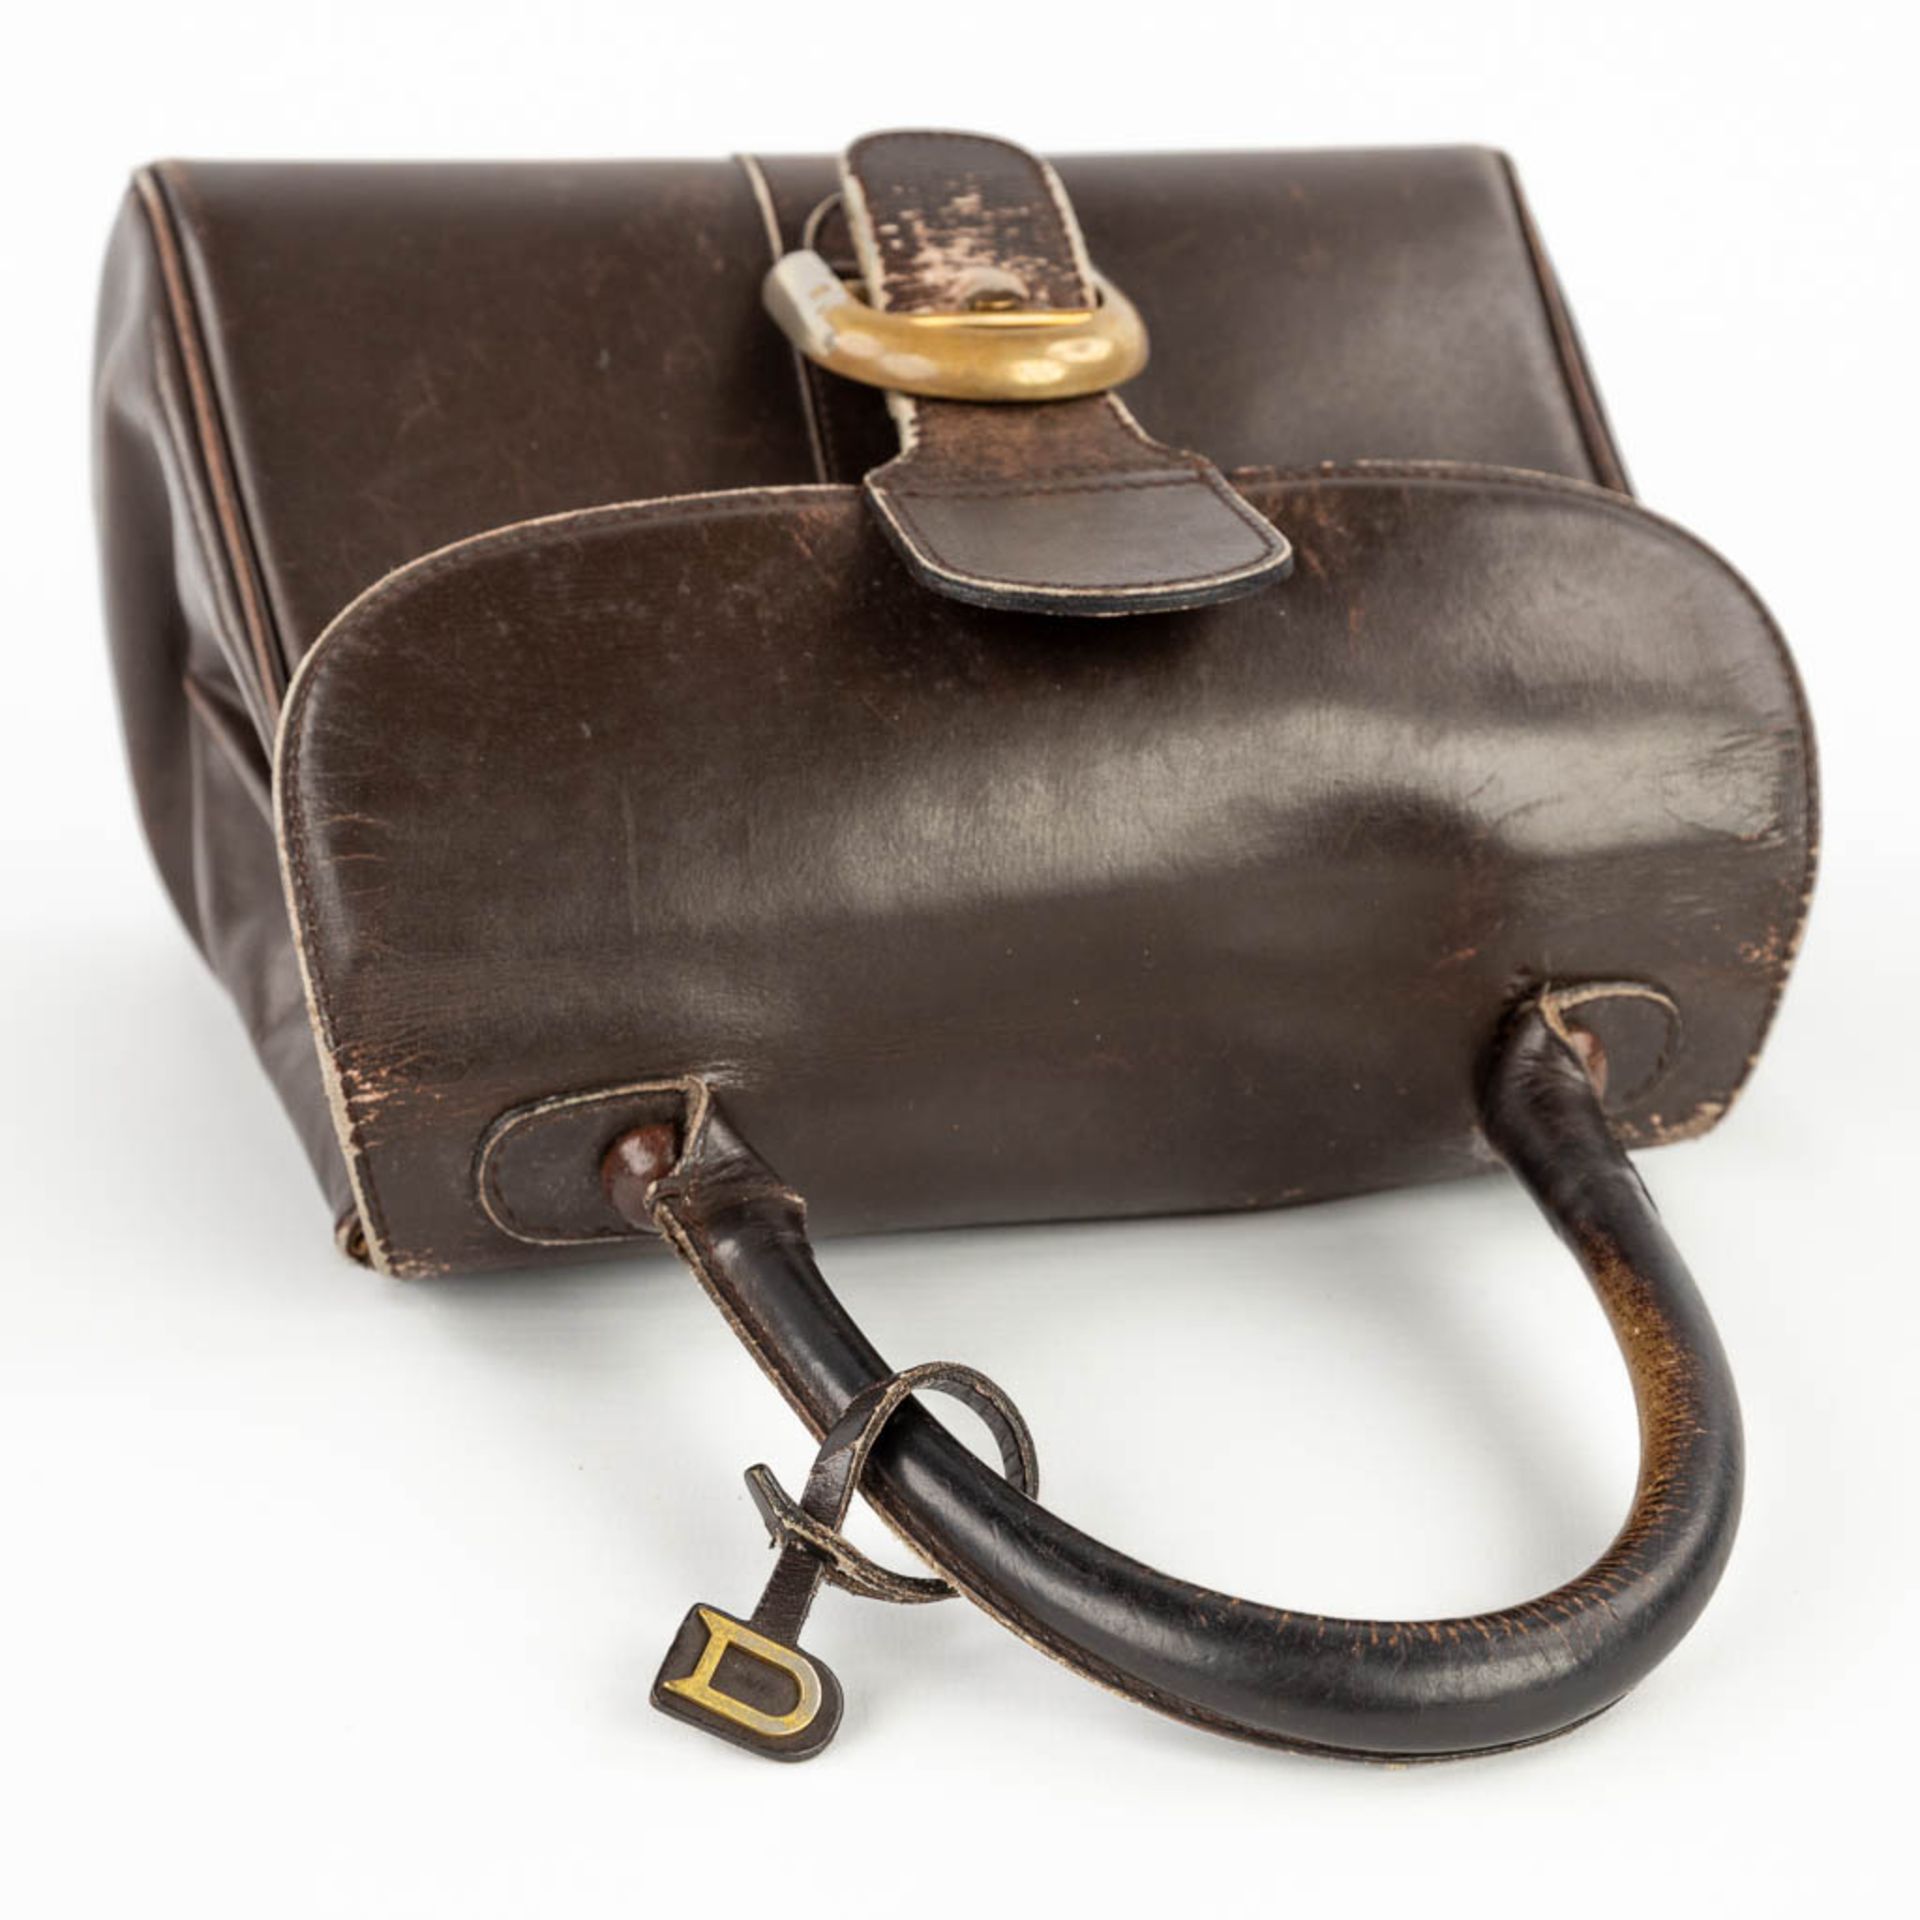 Delvaux Brillant PM, a handbag made of dark brown leather. Circa 1950. (W: 26 x H: 30 cm) - Image 8 of 19